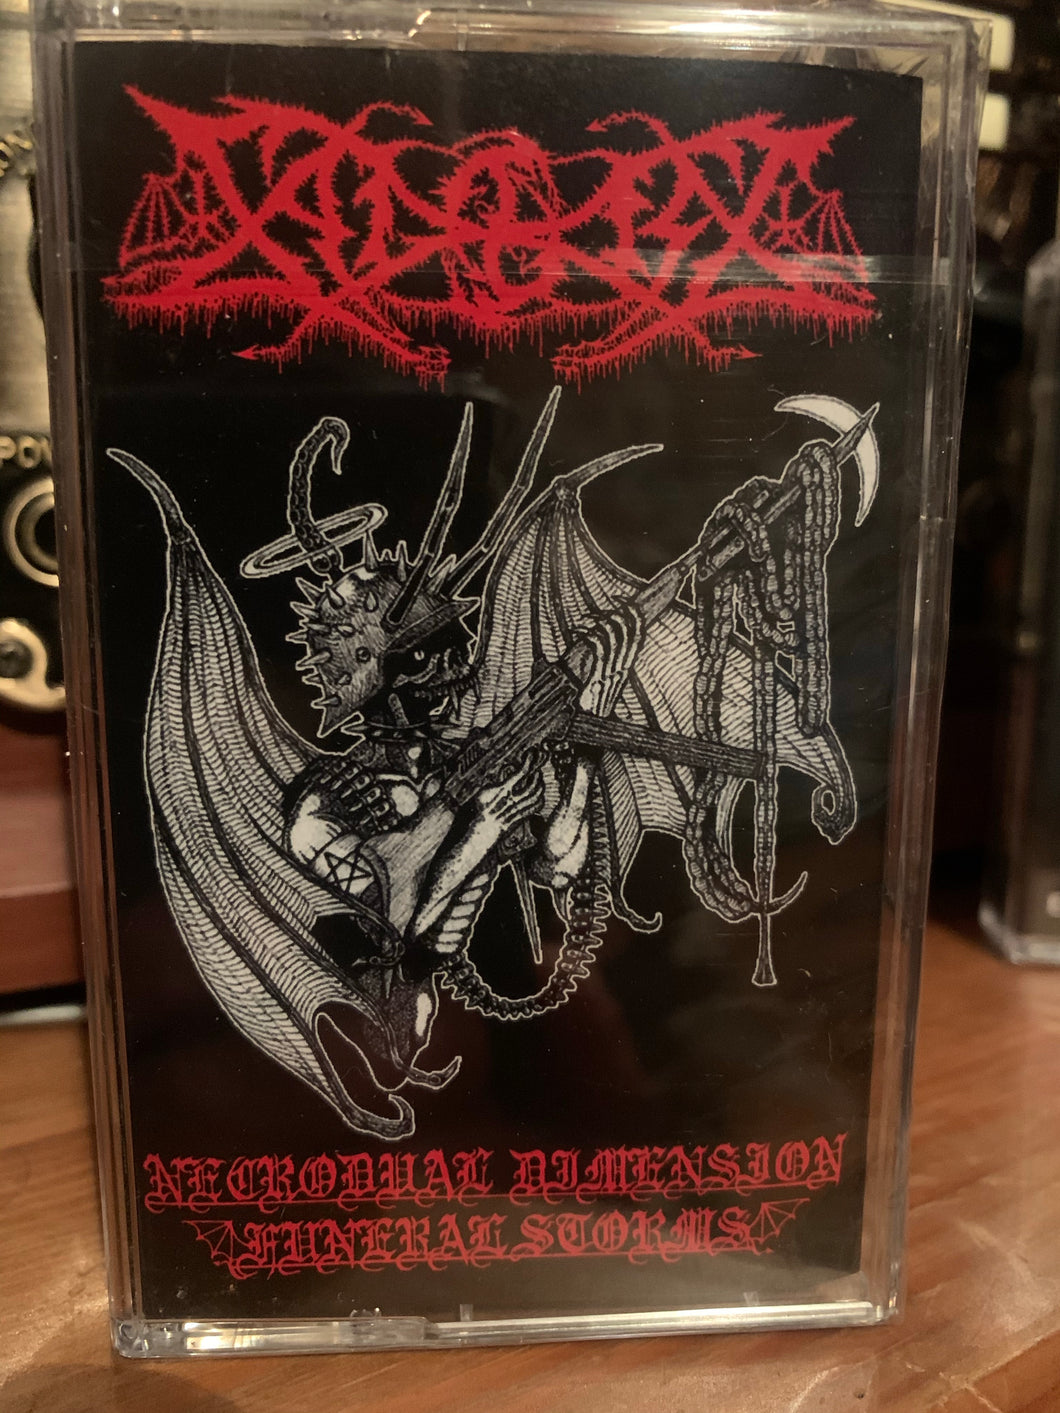 SADOKIST - Necrodual Dimension Funeral Storms  MC